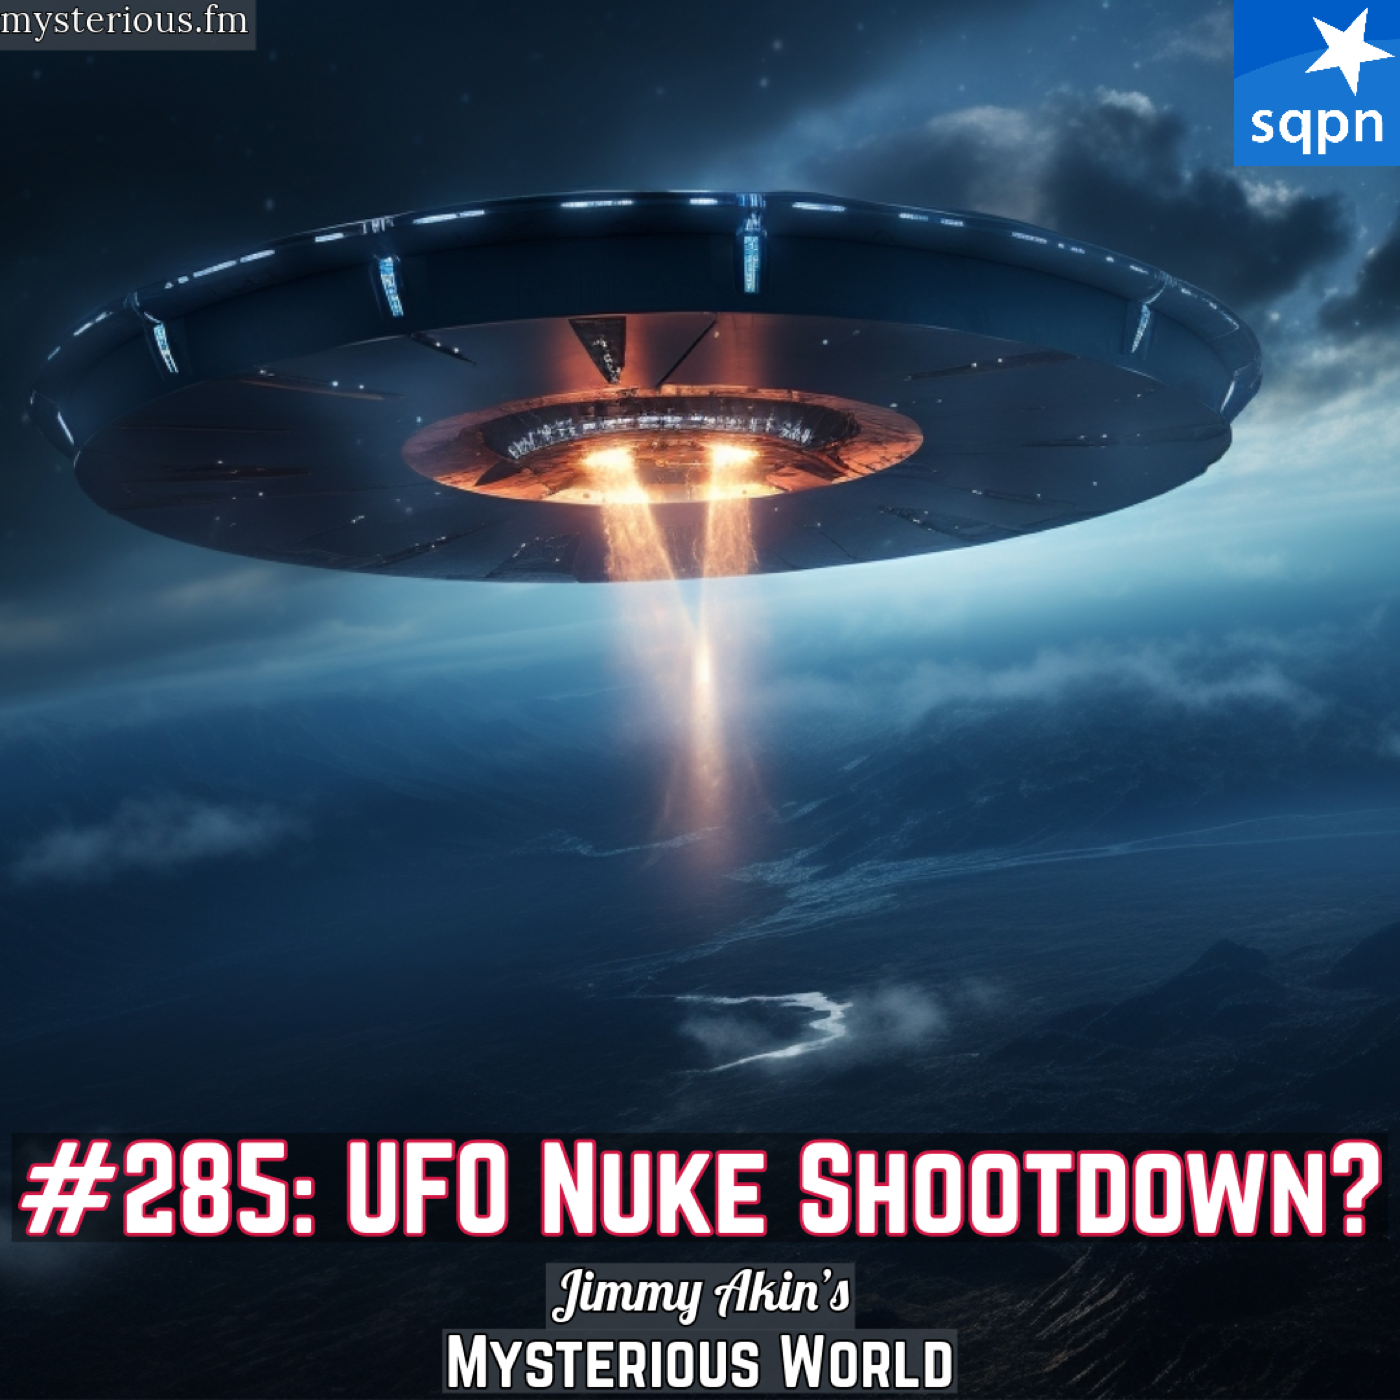 UFO Nuclear Missile Shootdown (Big Sur UFO Incident)